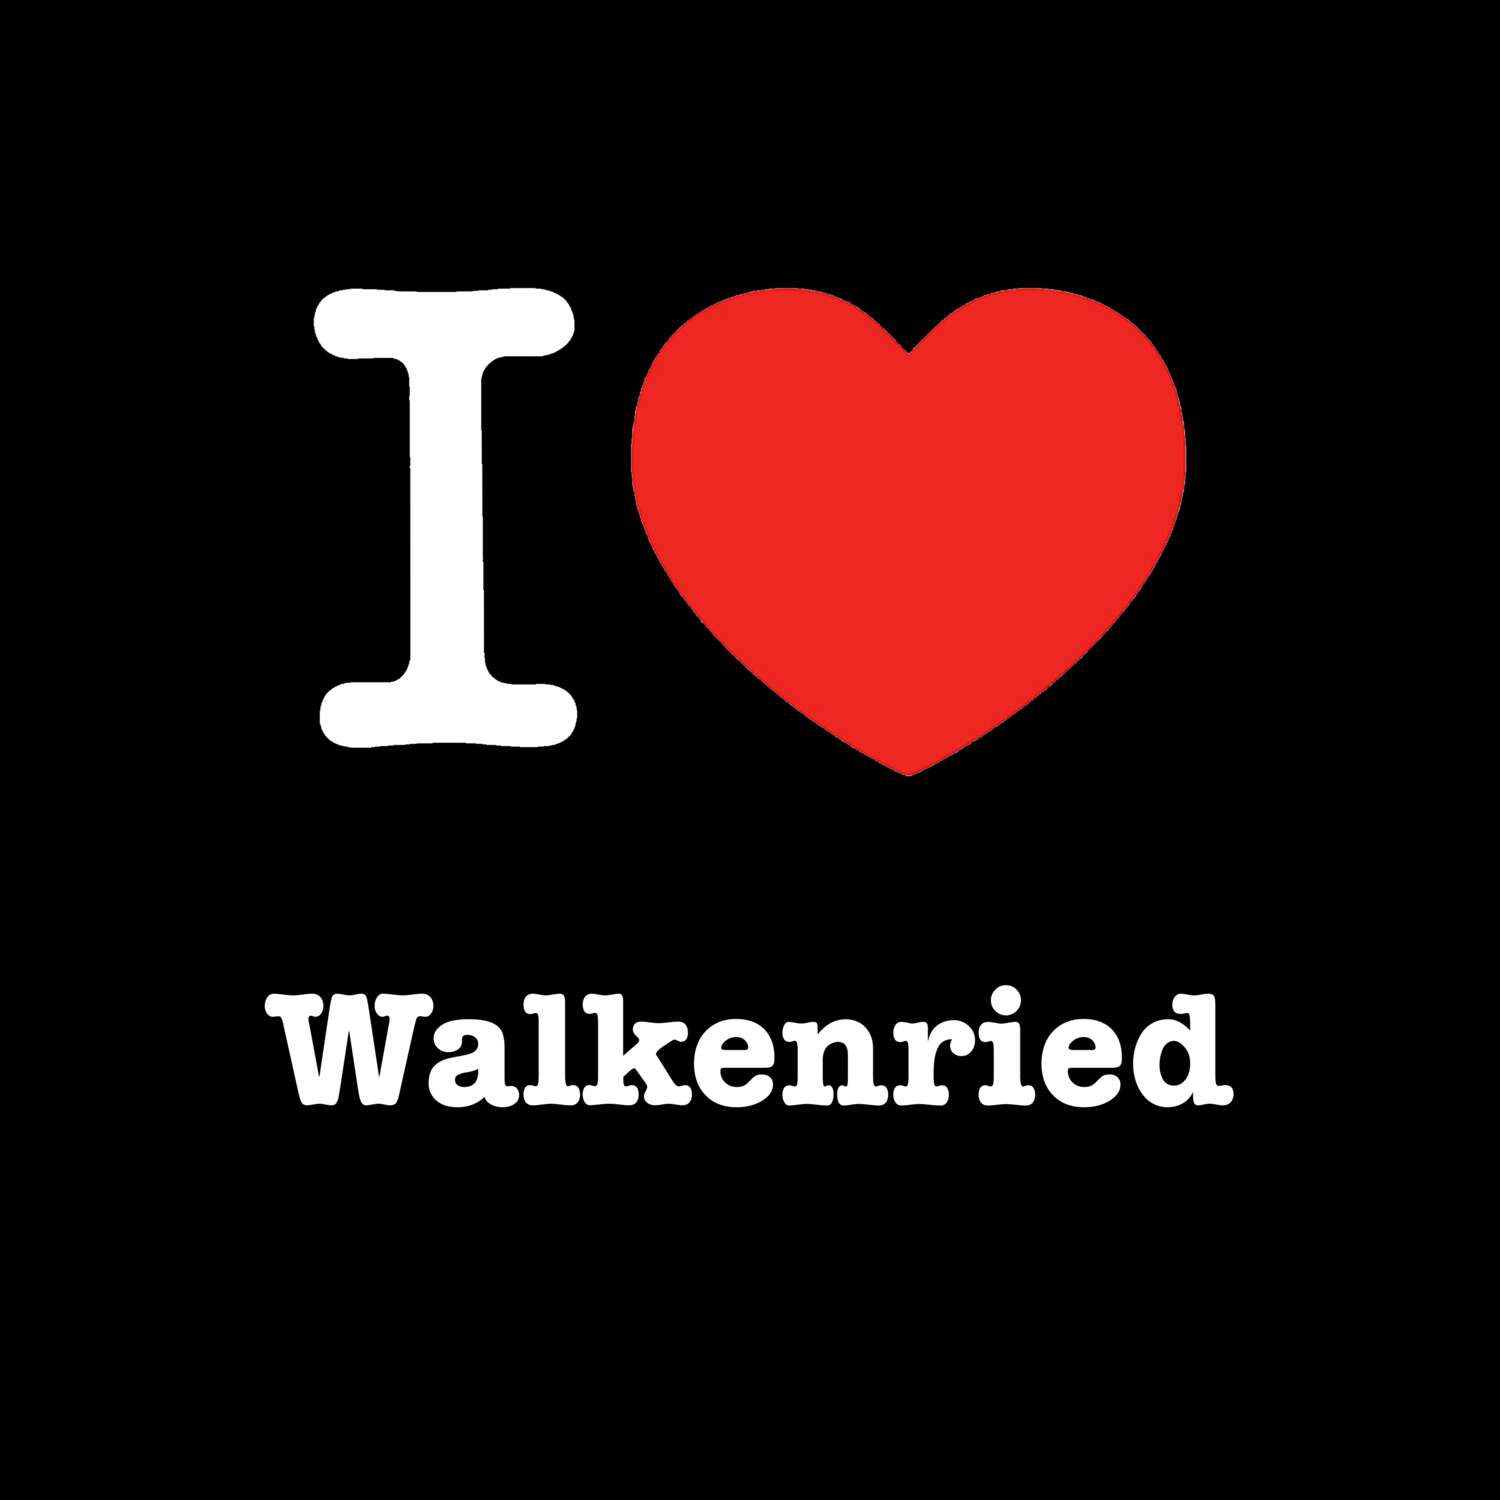 Walkenried T-Shirt »I love«